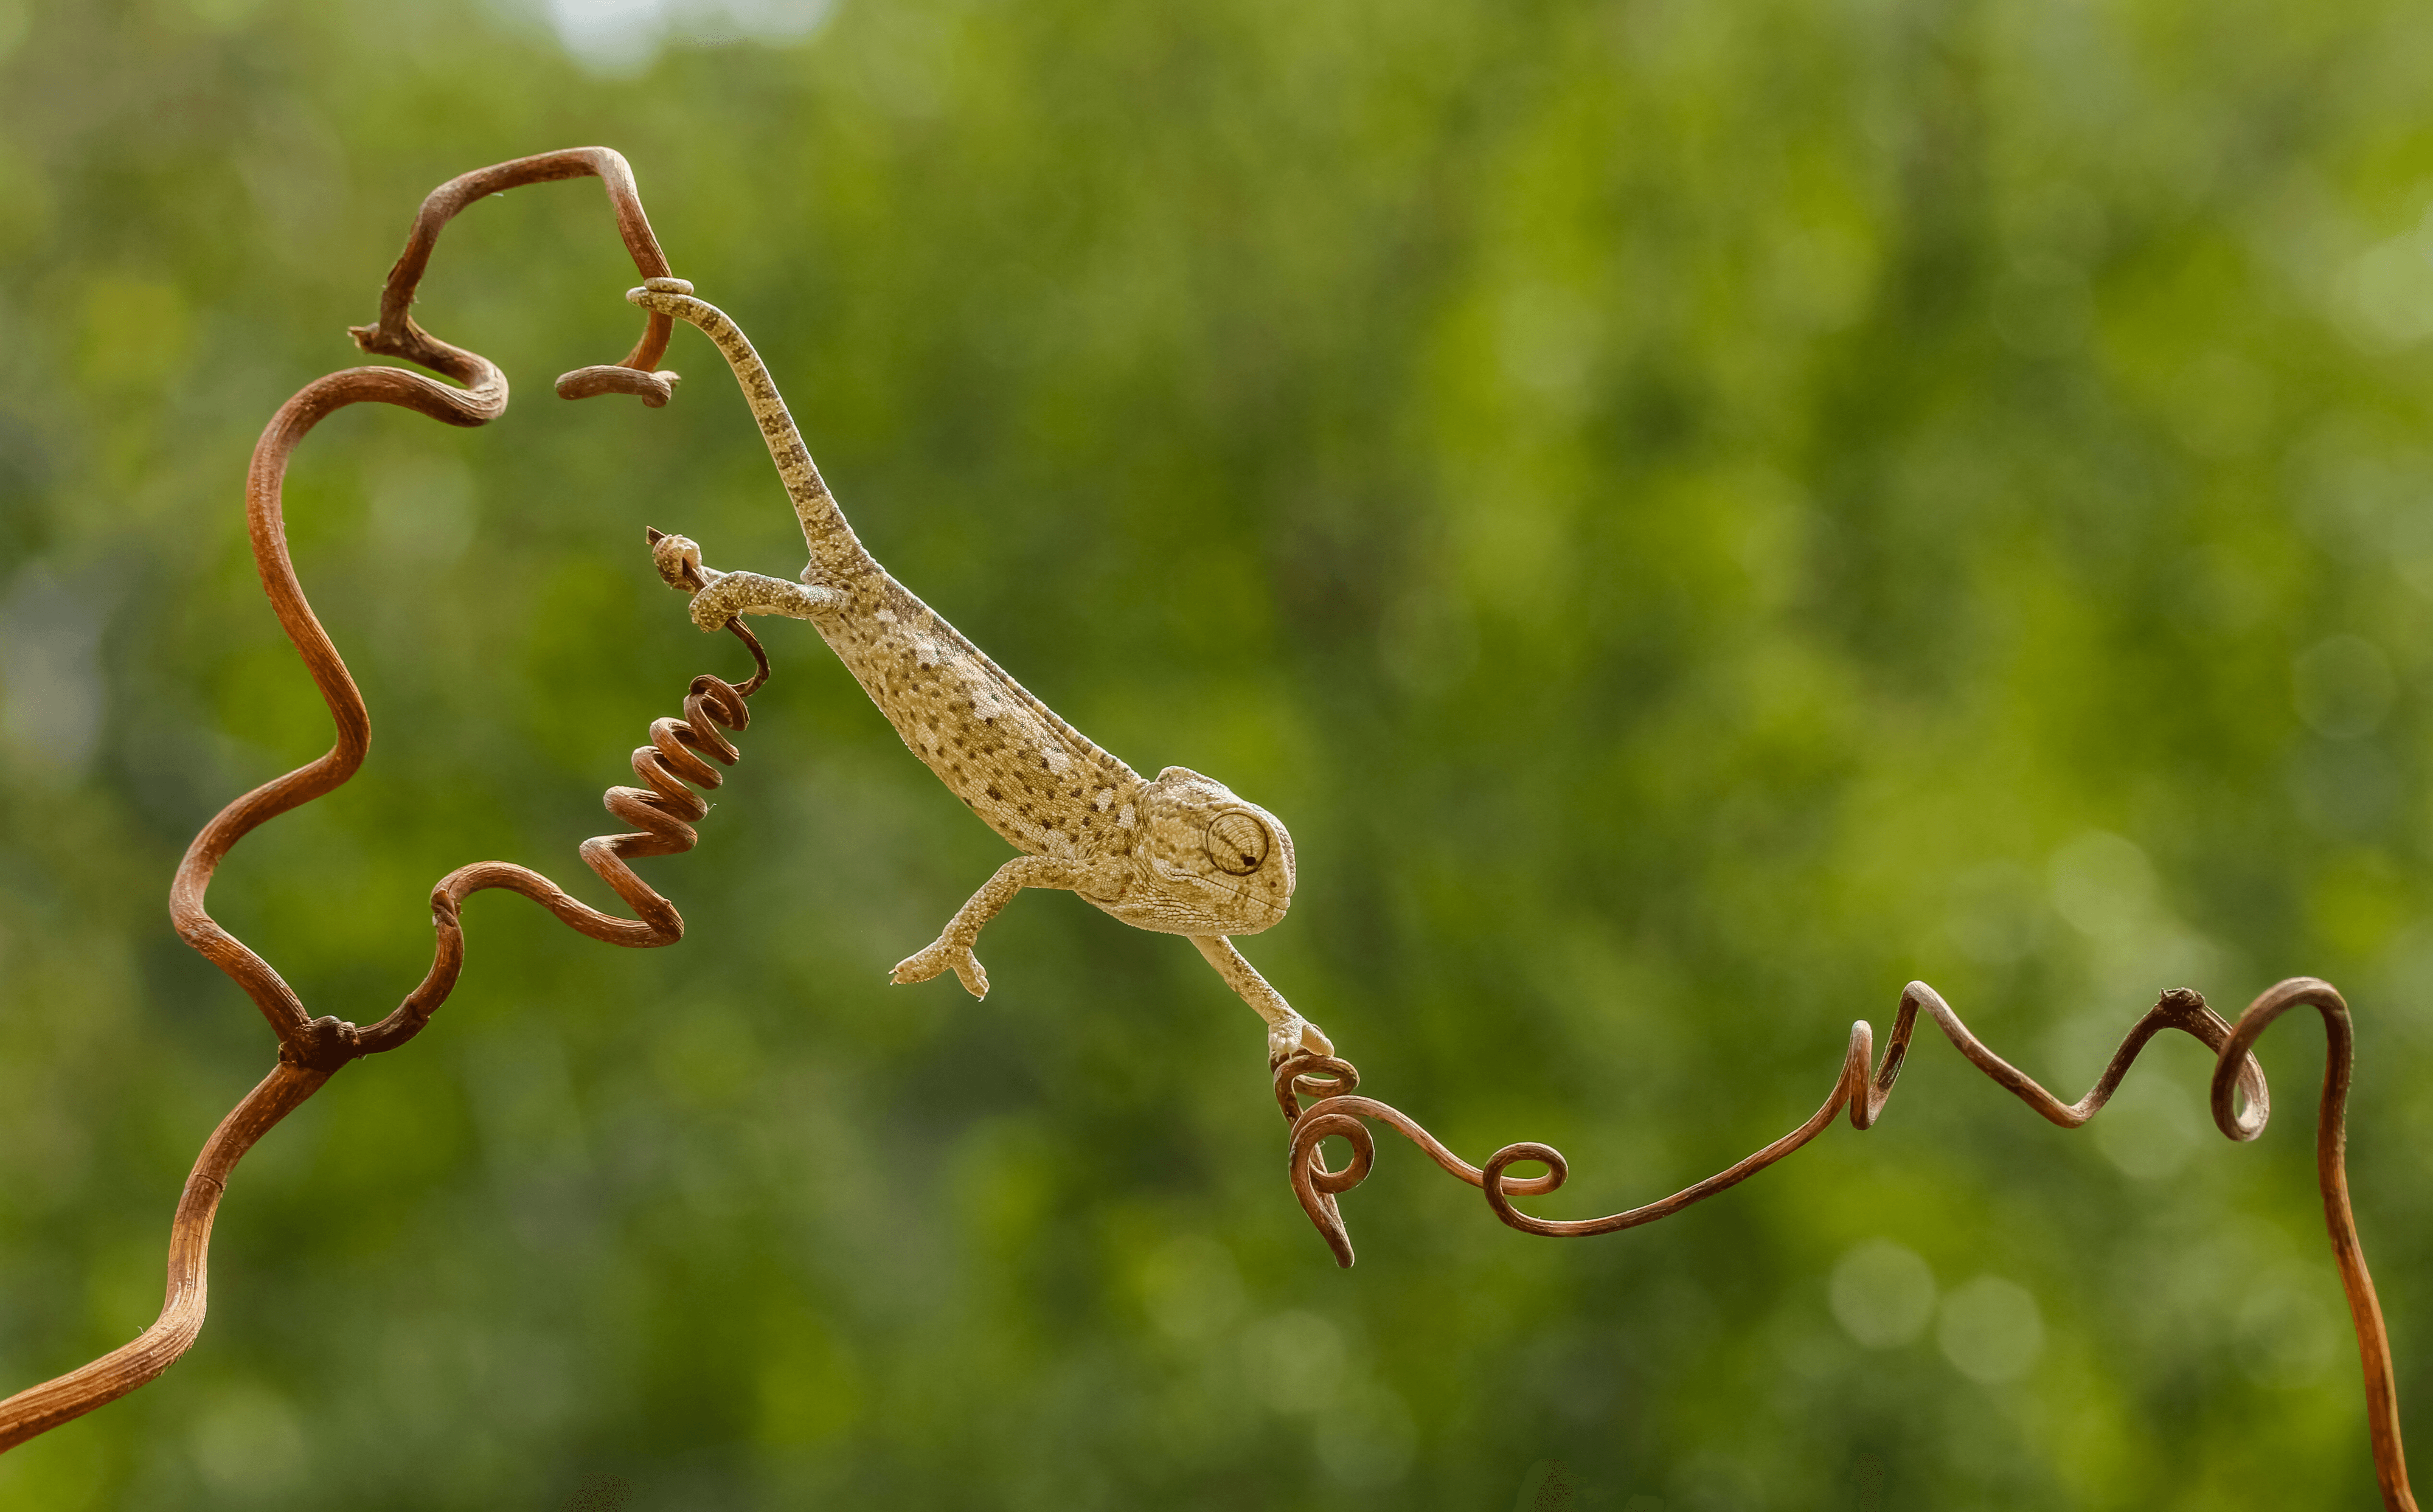 Chameleon in his elegance